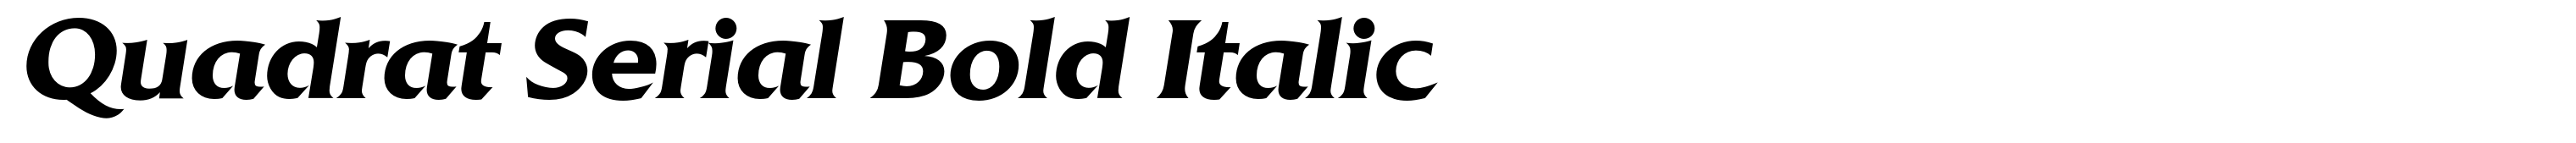 Quadrat Serial Bold Italic